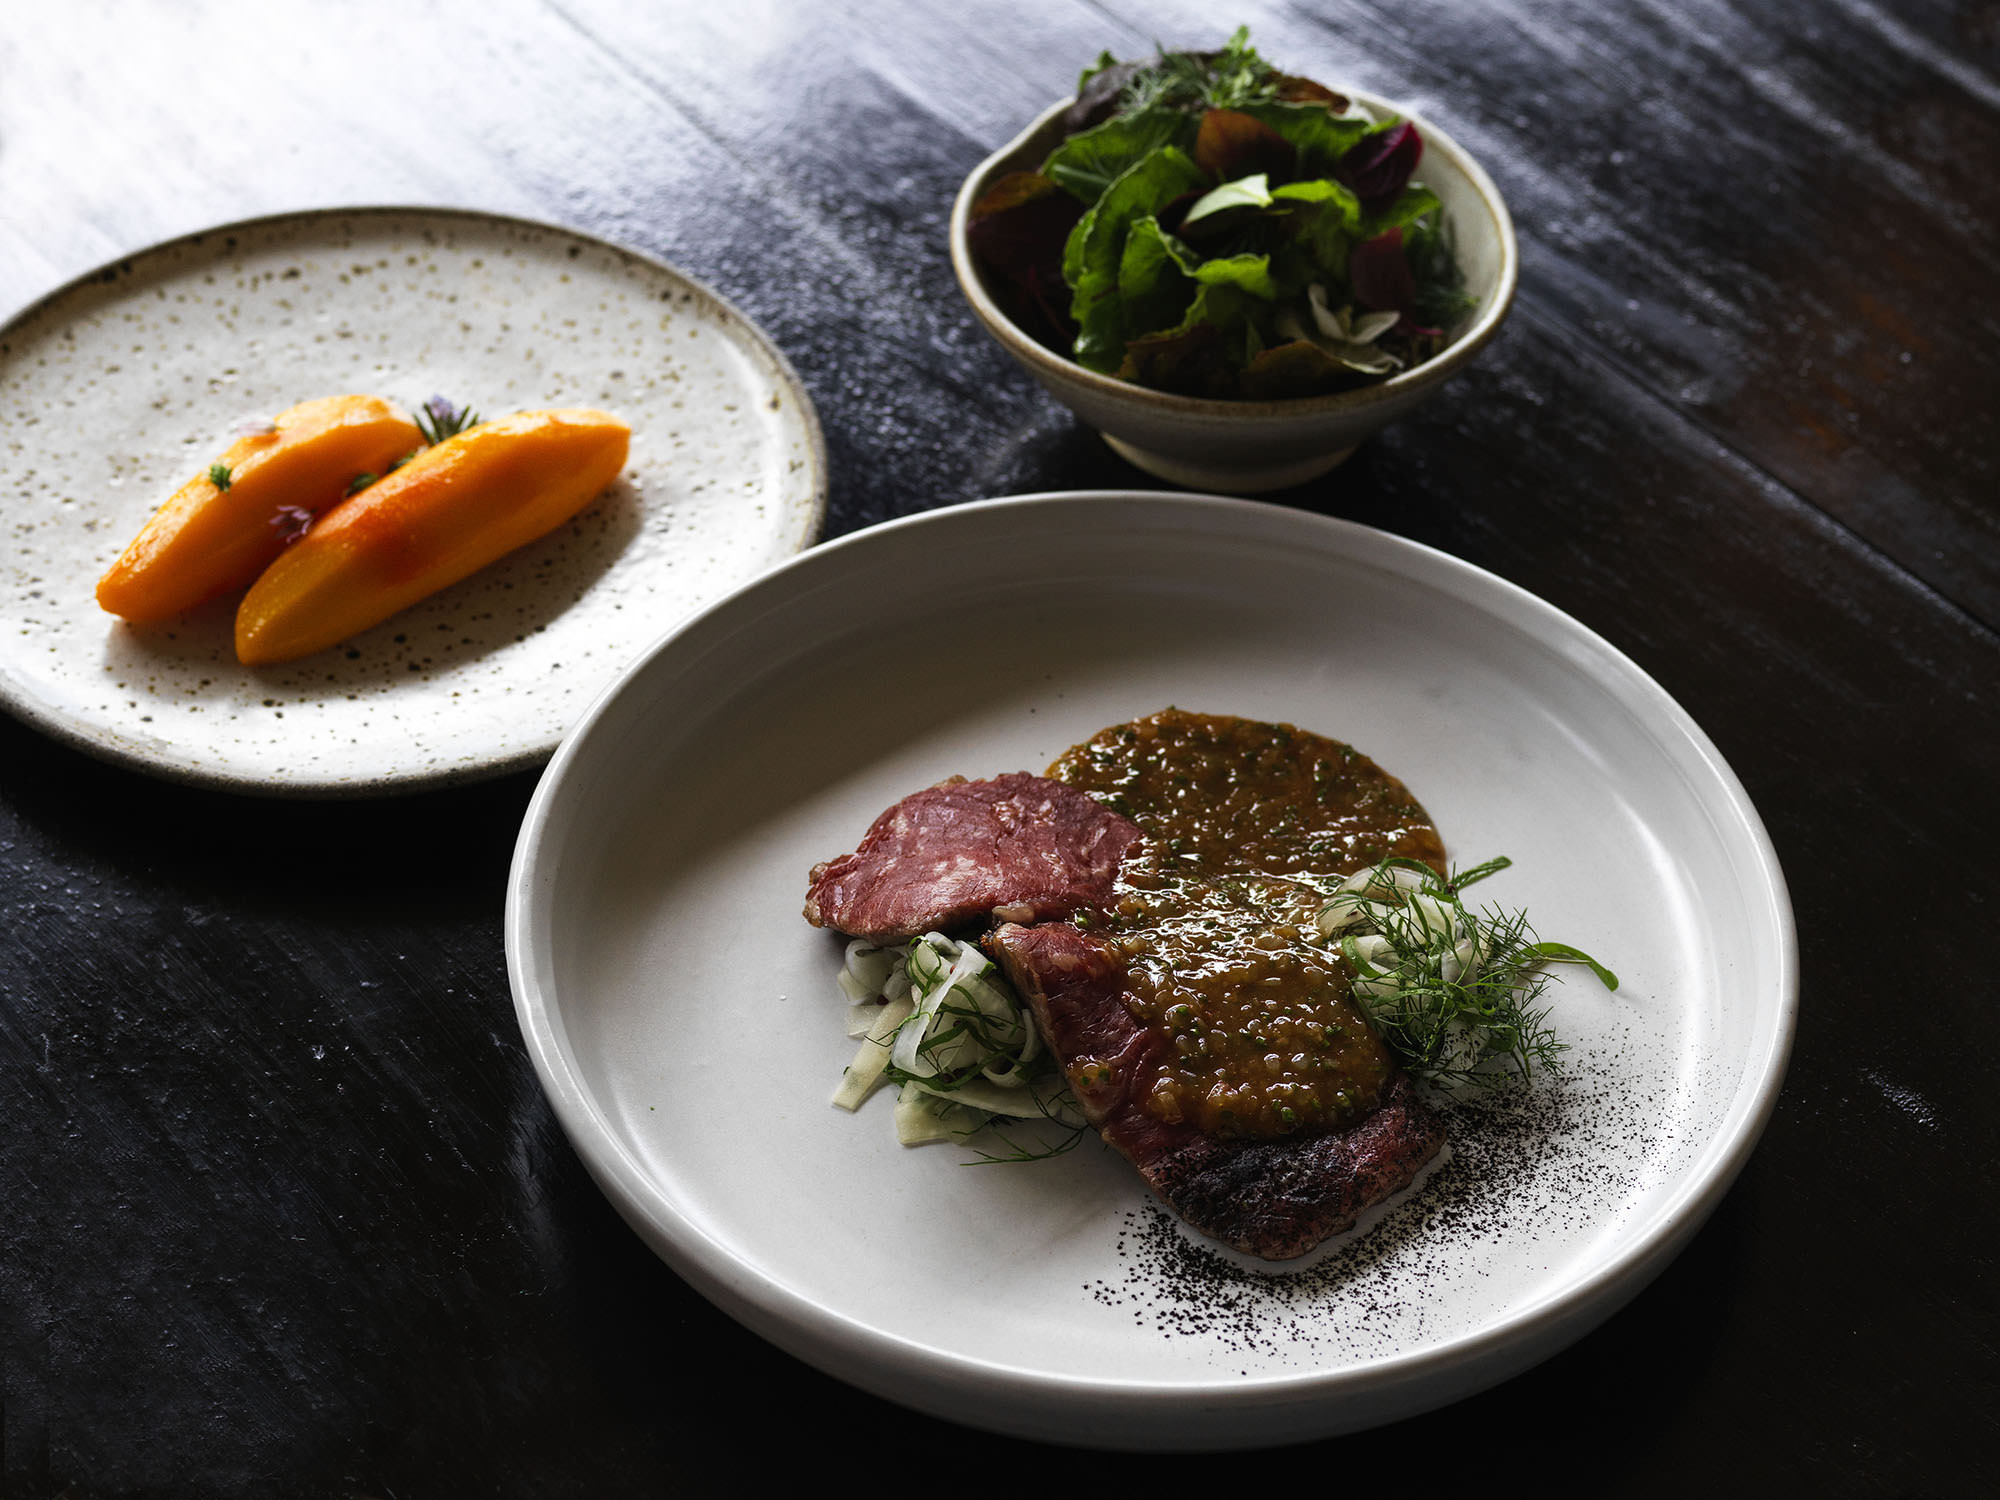 Pilot’s take on a pub classic – sirloin steak with pepper sauce.